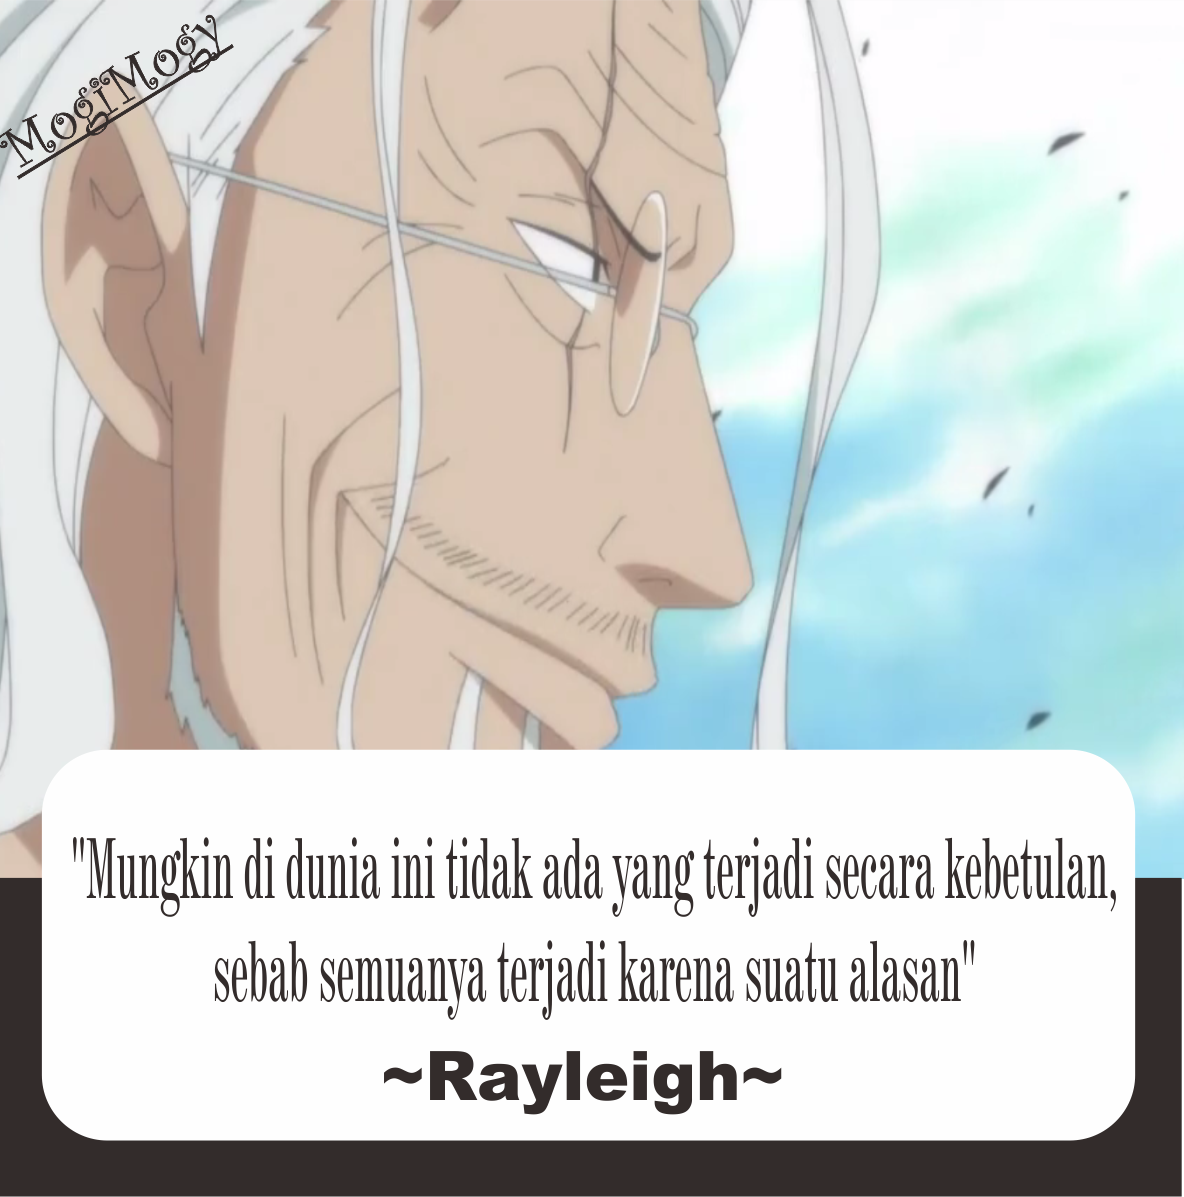 Kumpulan Meme Anime One Piece Indonesia Kumpulan Gambar Meme Lucu